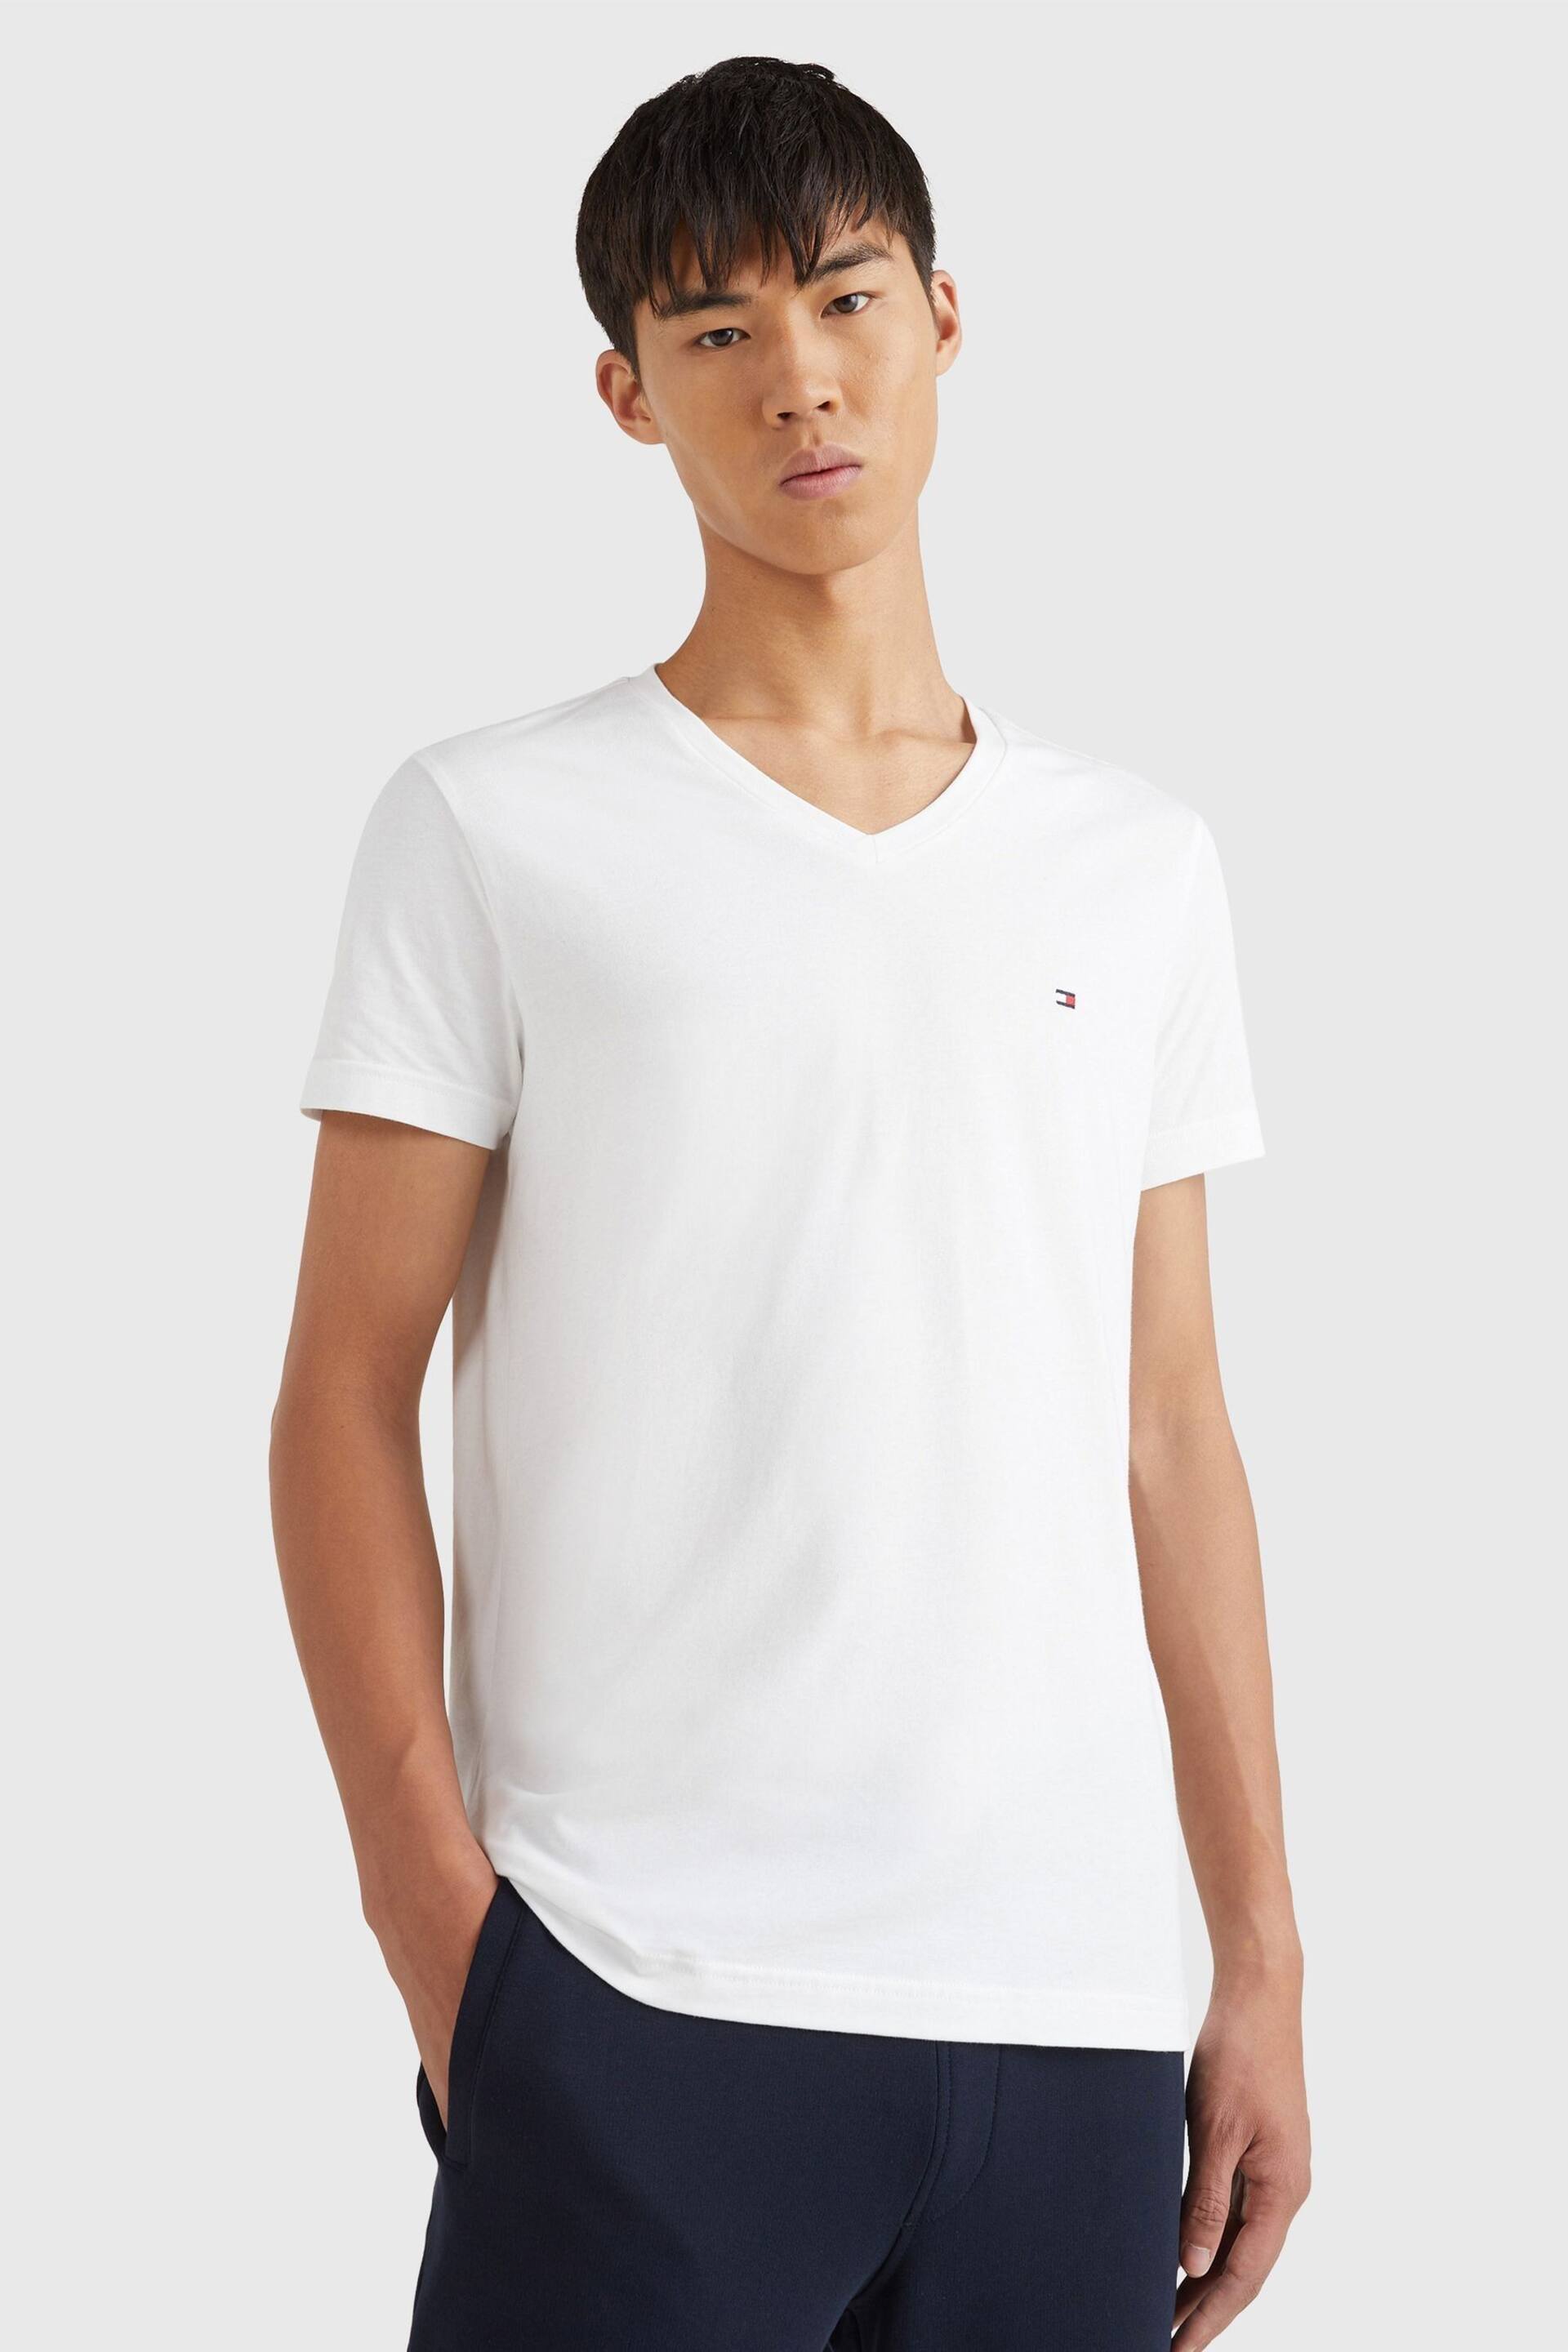 Tommy Hilfiger White Core Stretch Slim Fit V-Neck T-Shirt - Image 1 of 4